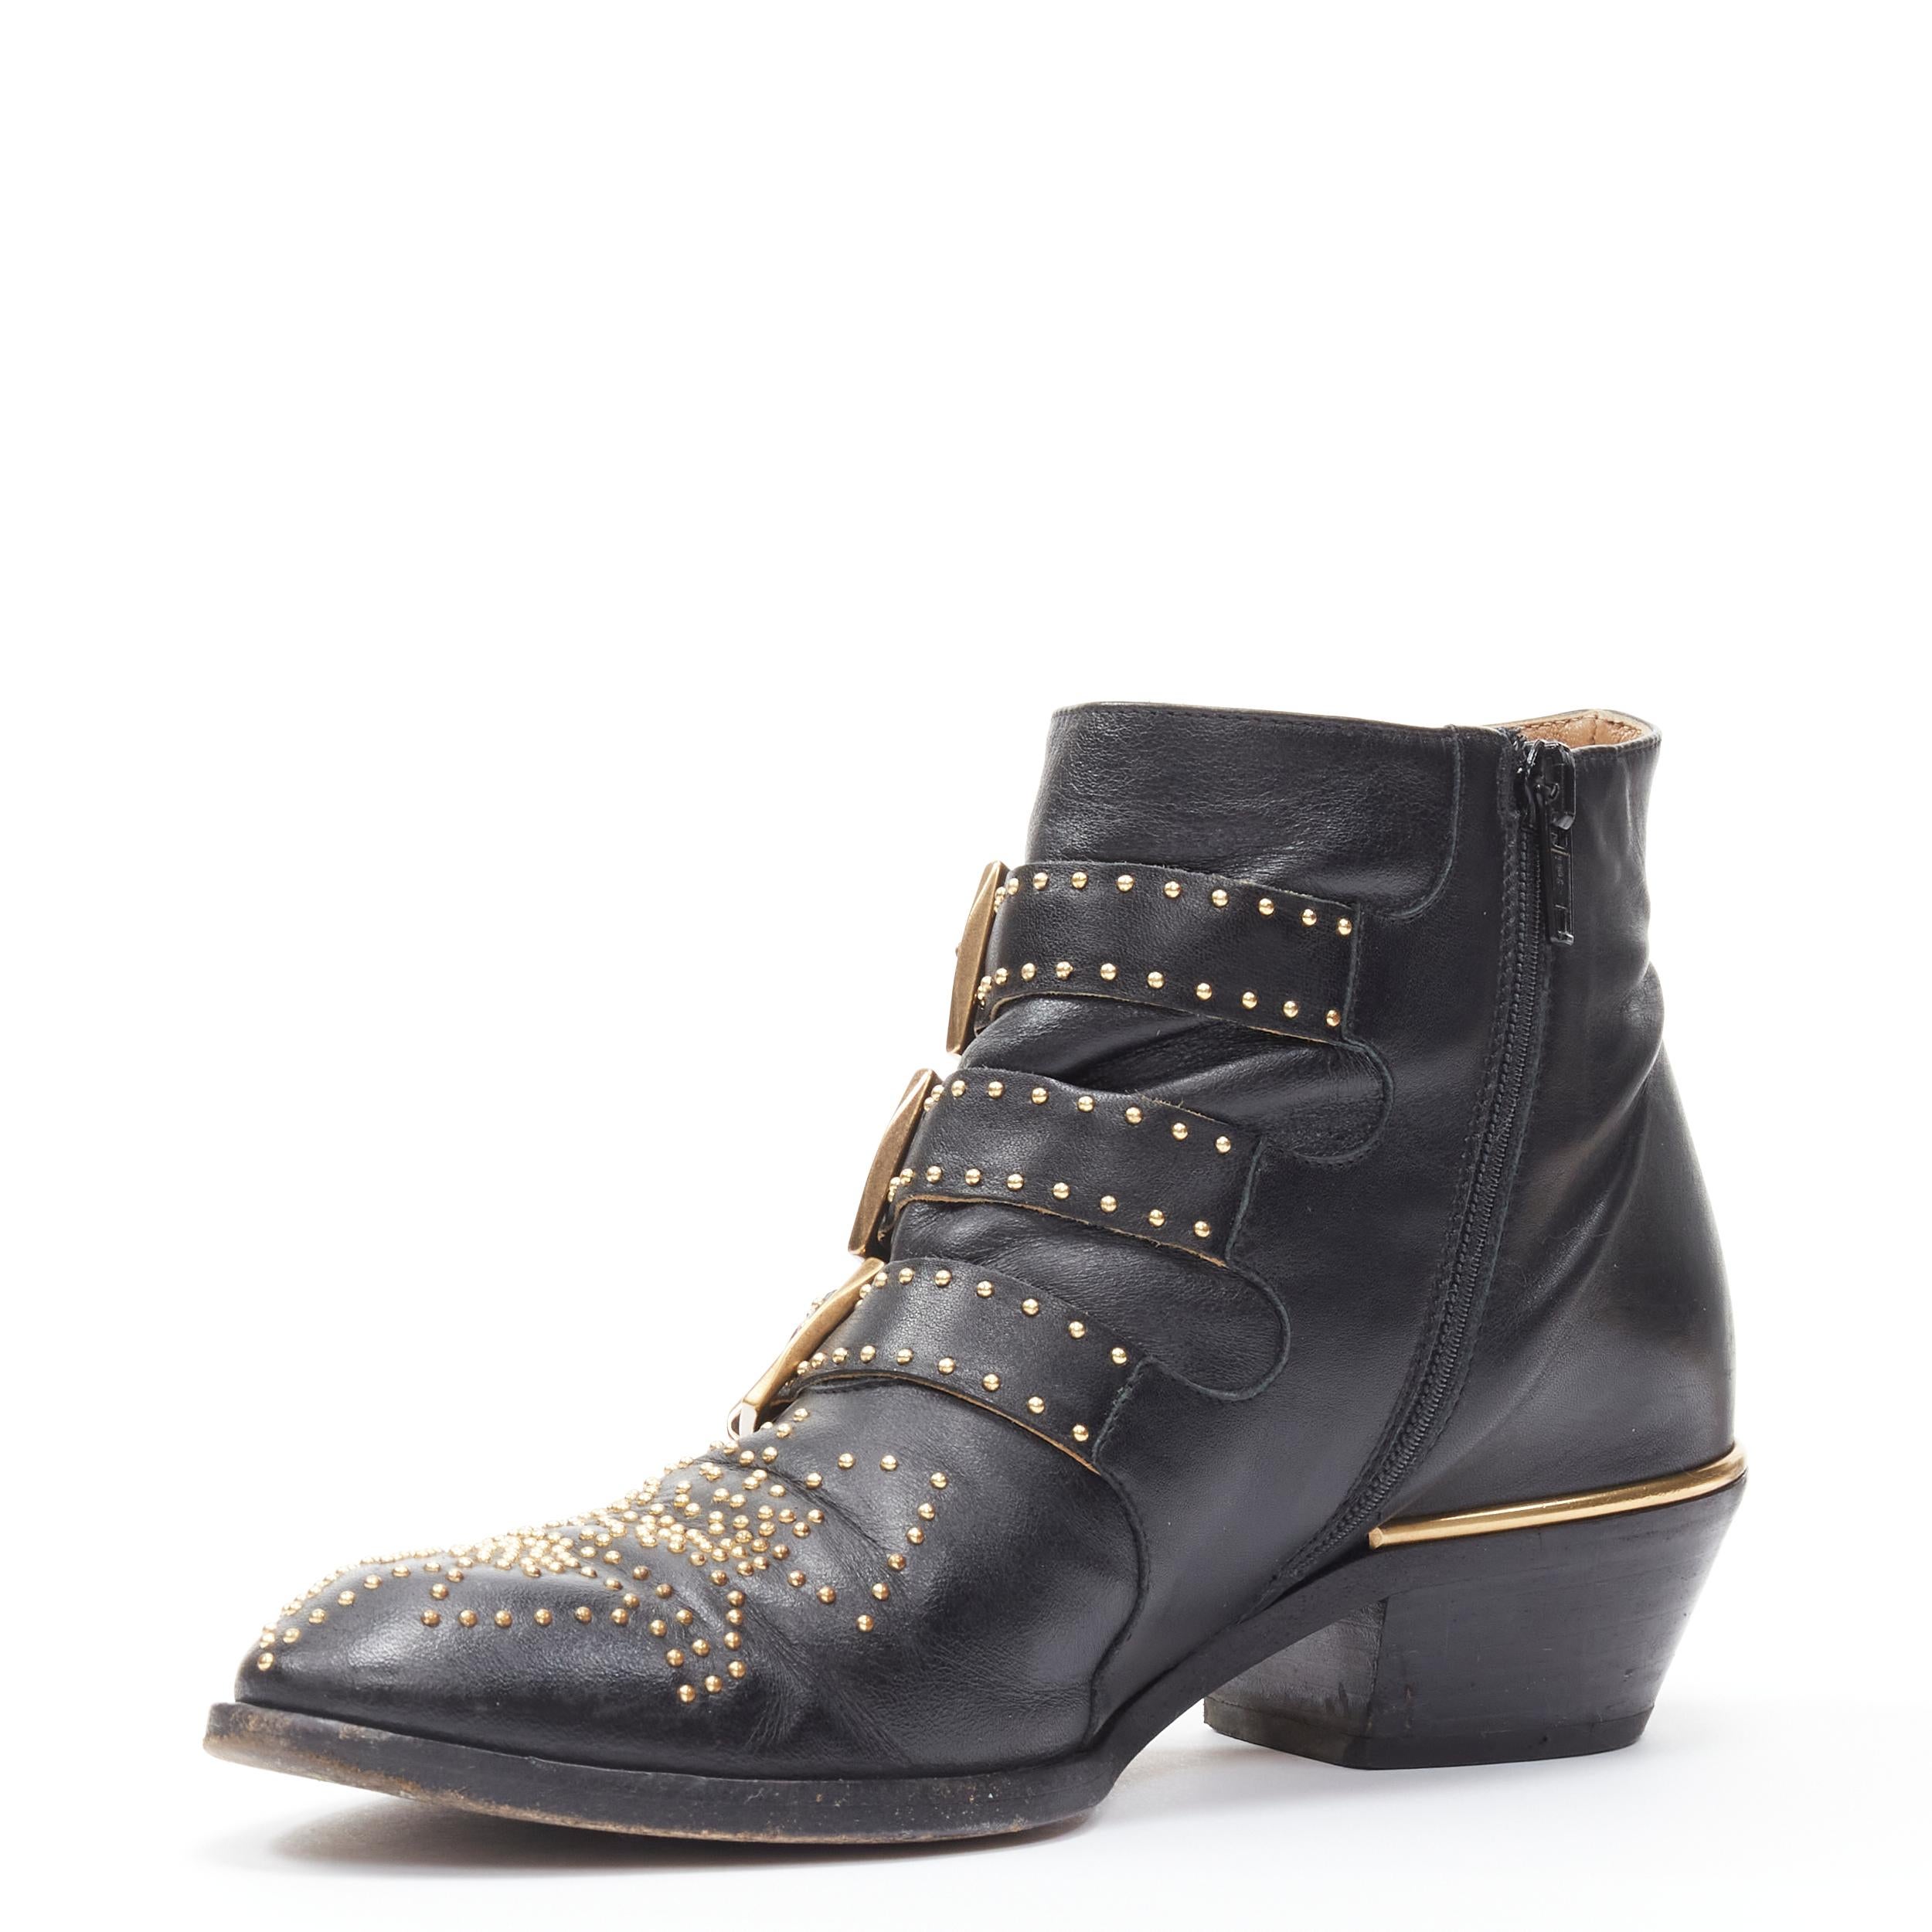 Black CHLOE Susanna black leather gold floral studded buckle ankle boot EU36.5